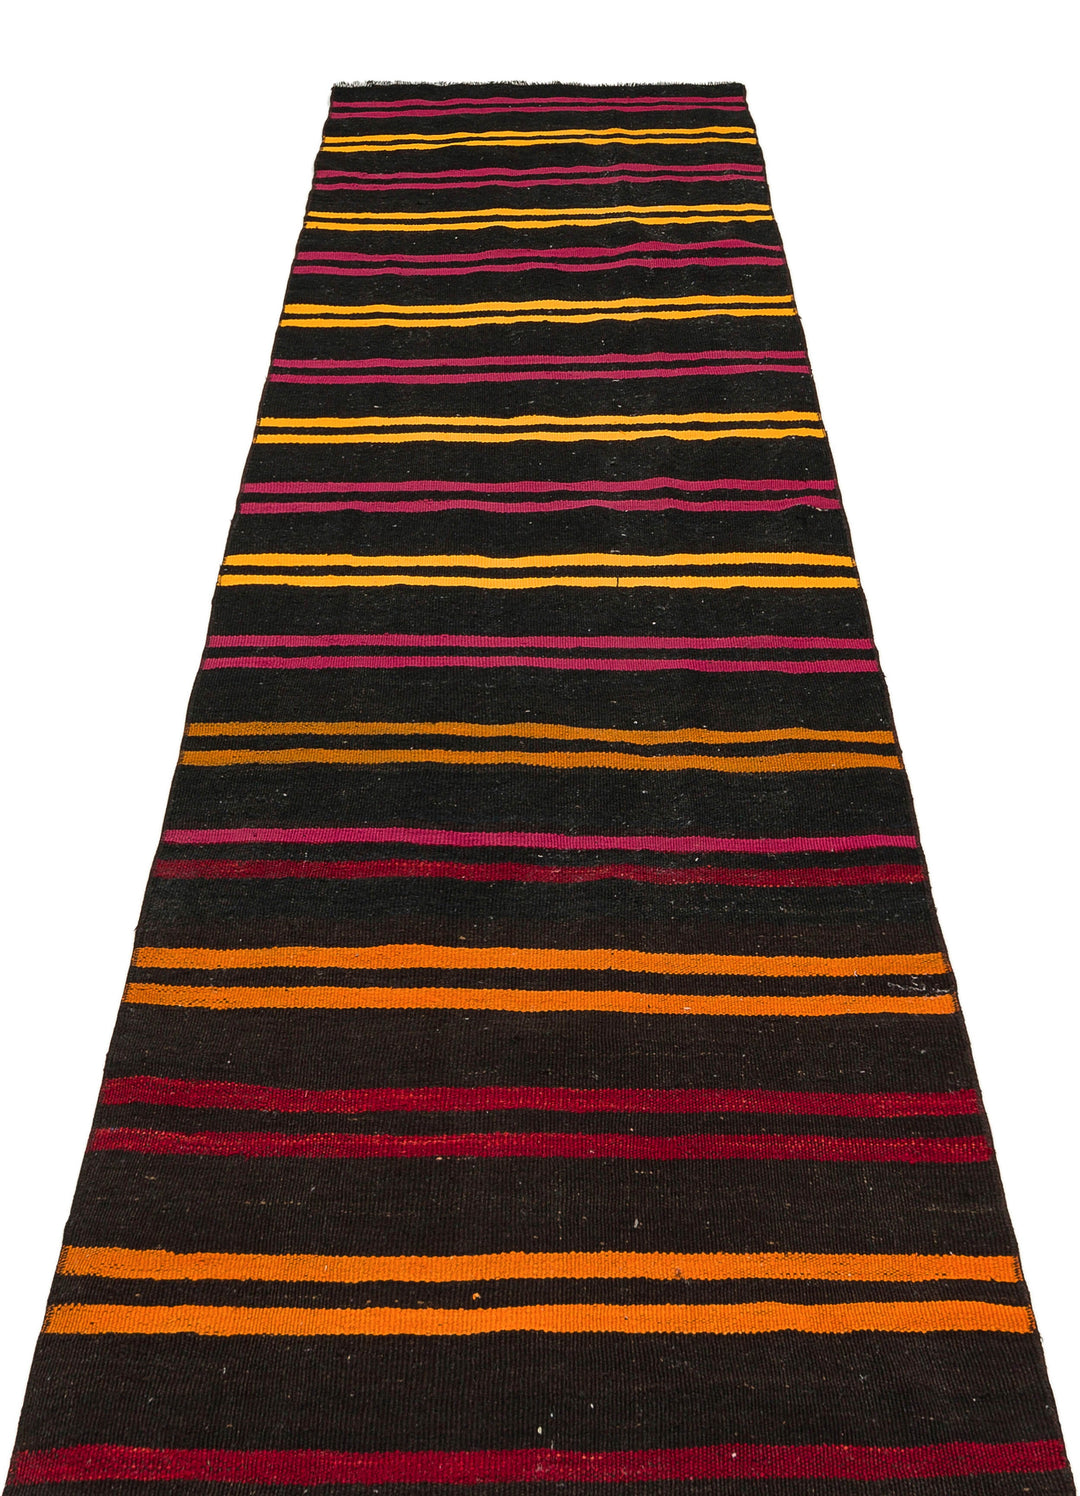 Cretan Brown Striped Wool Hand Woven Carpet 082 x 292